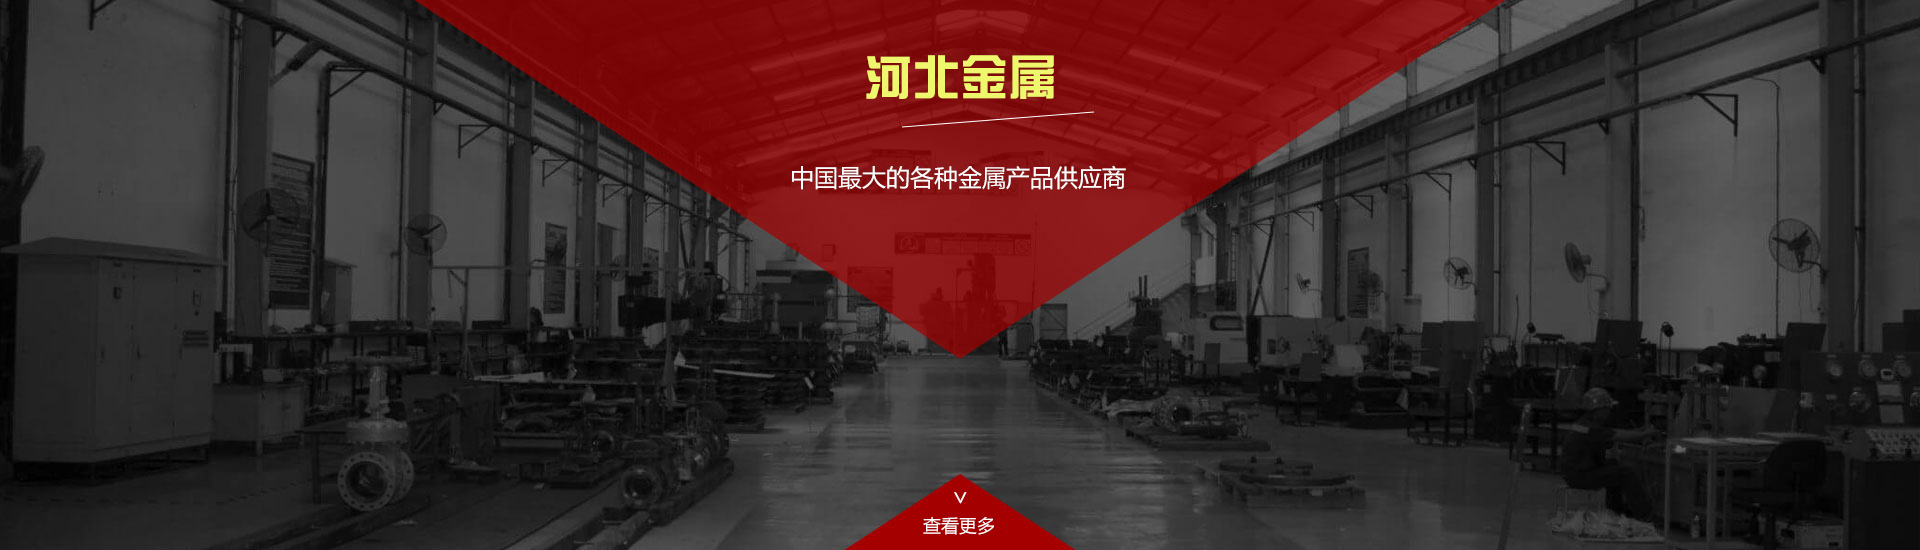 Hebei Metal: Leader in The Metal Building Materials Industry